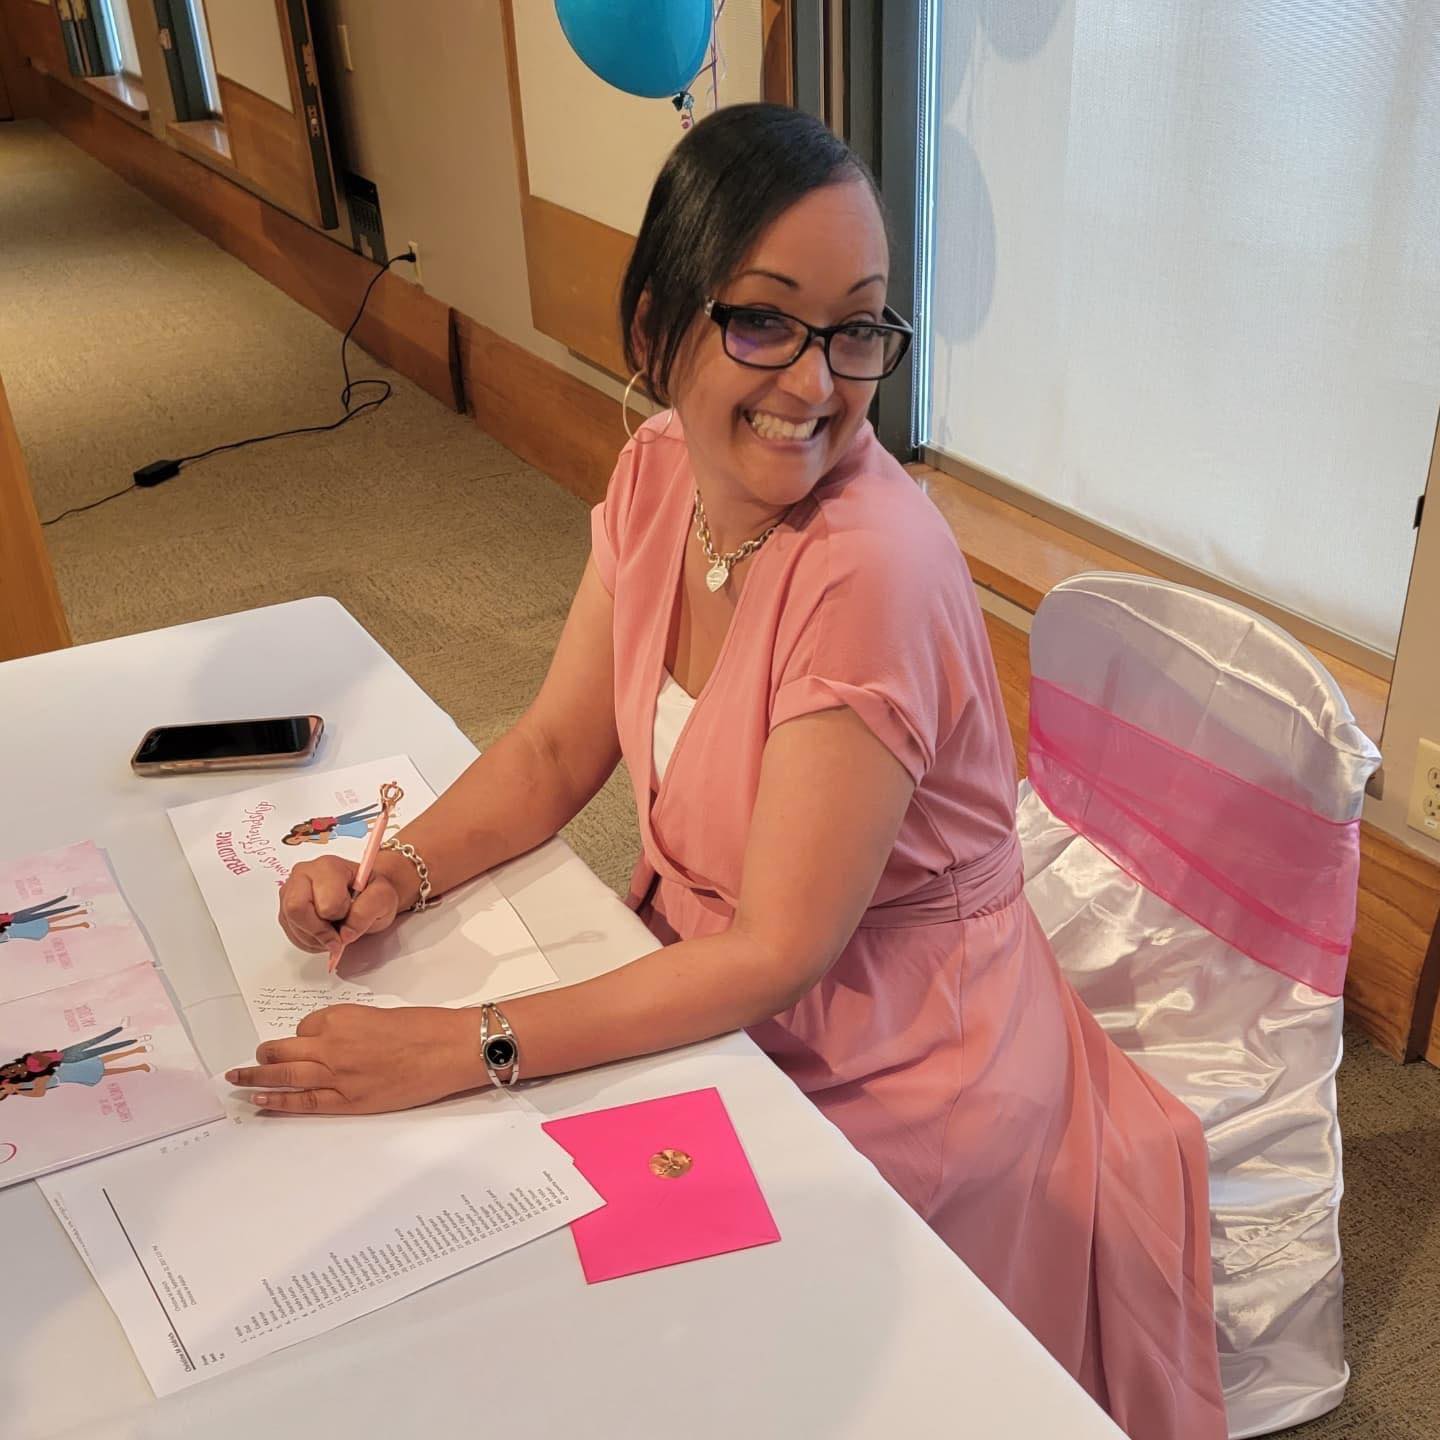 Author Christine signing books